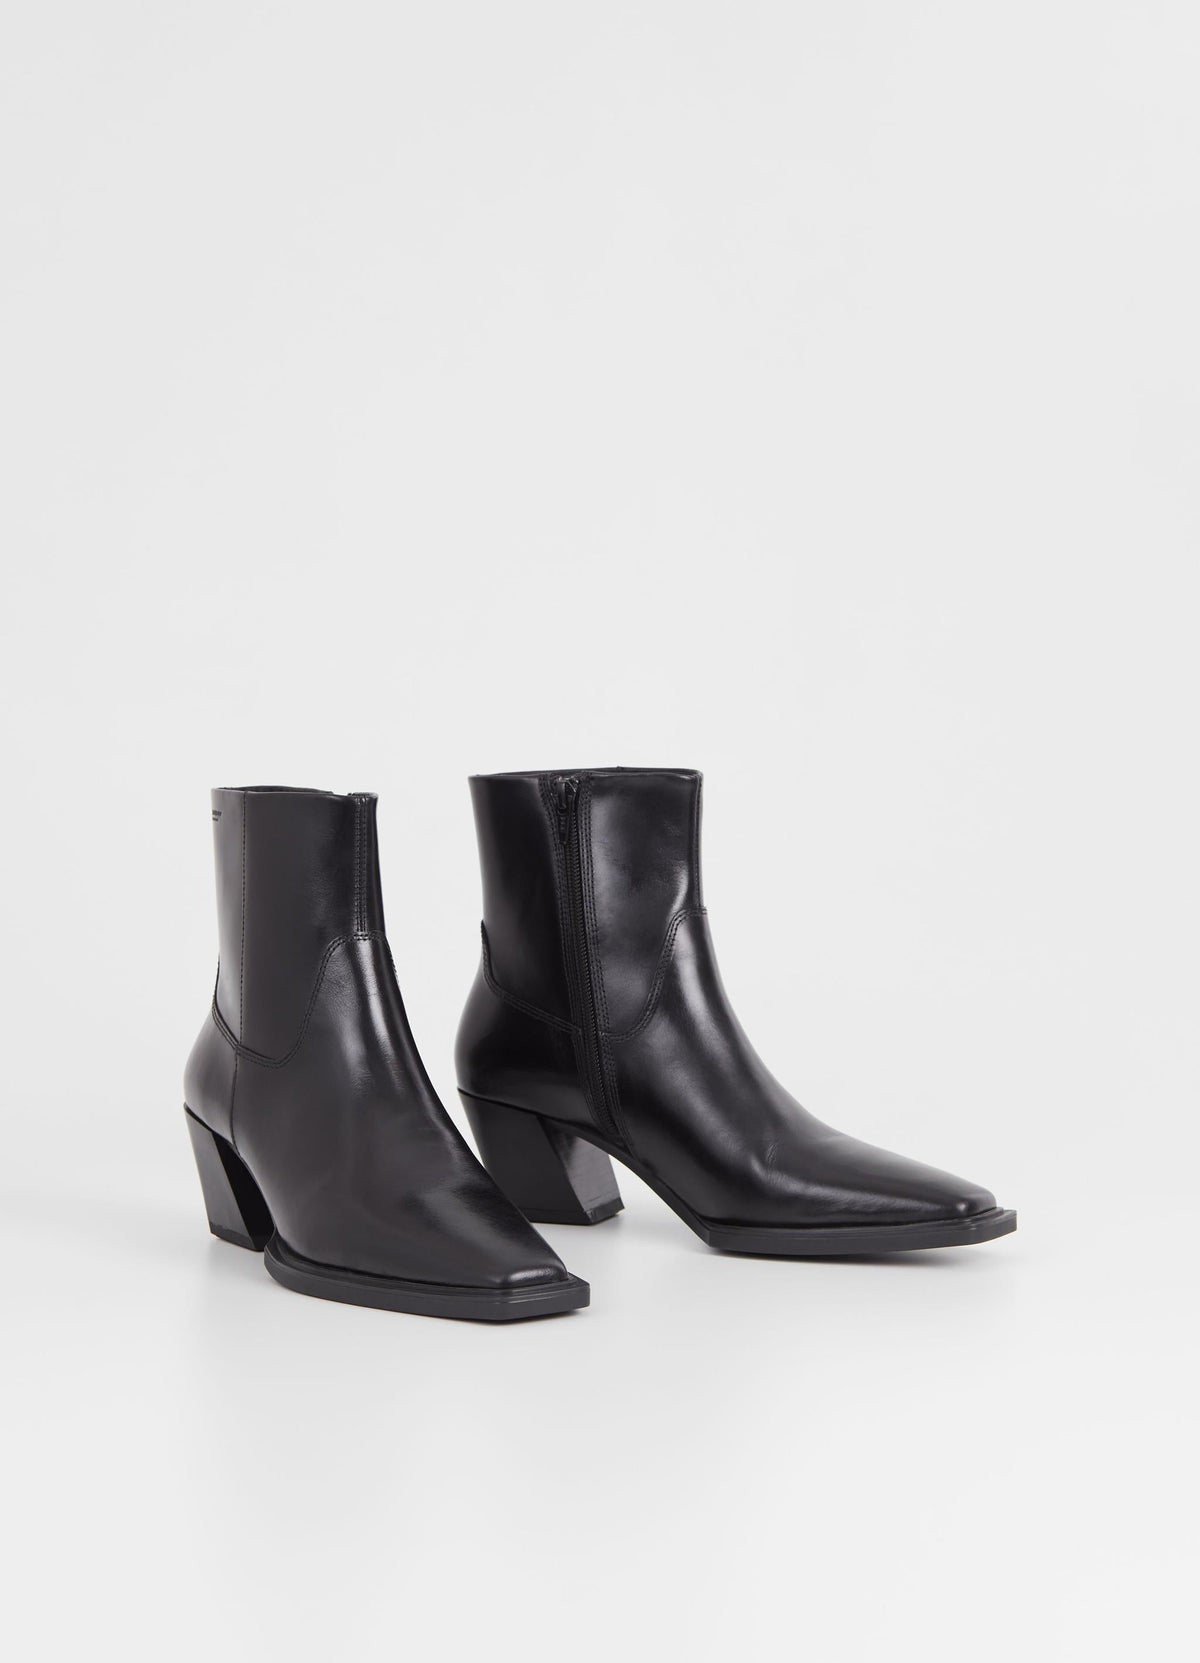 Western inspired slanted block heel black leather ankle boot